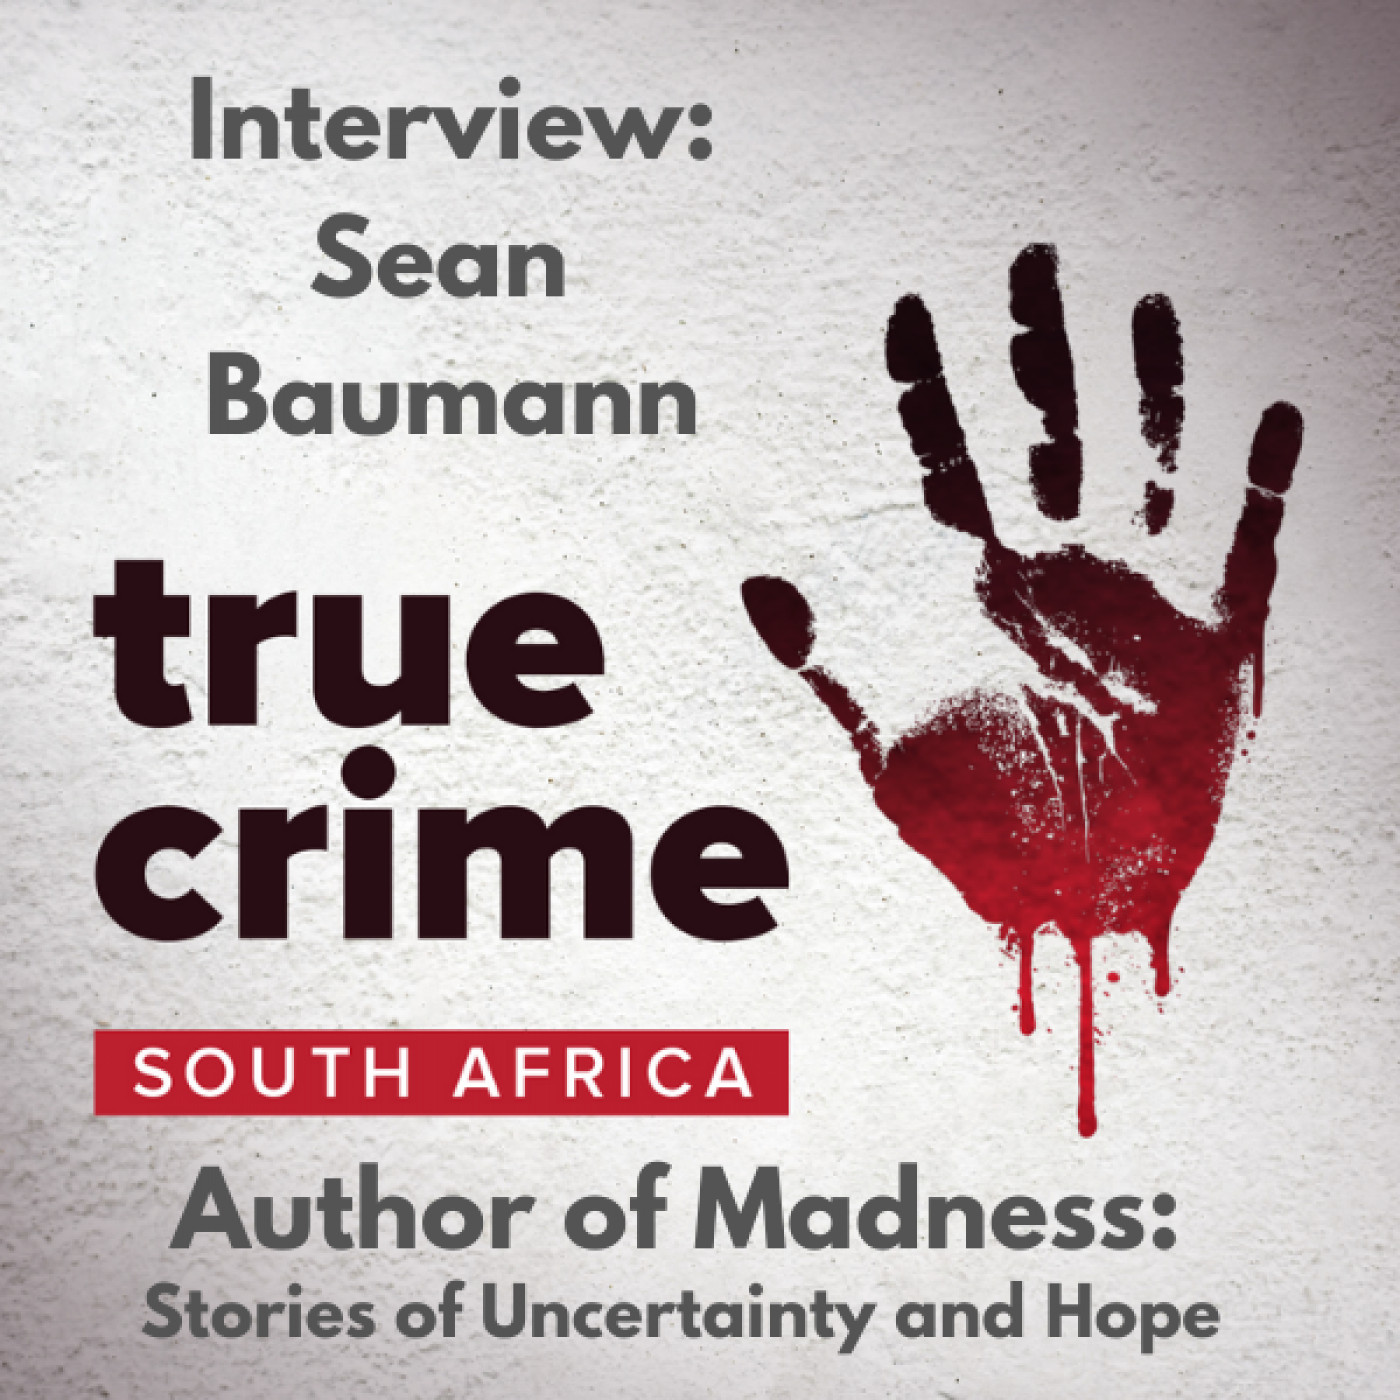 Interview: Sean Baumann - Author of Madness